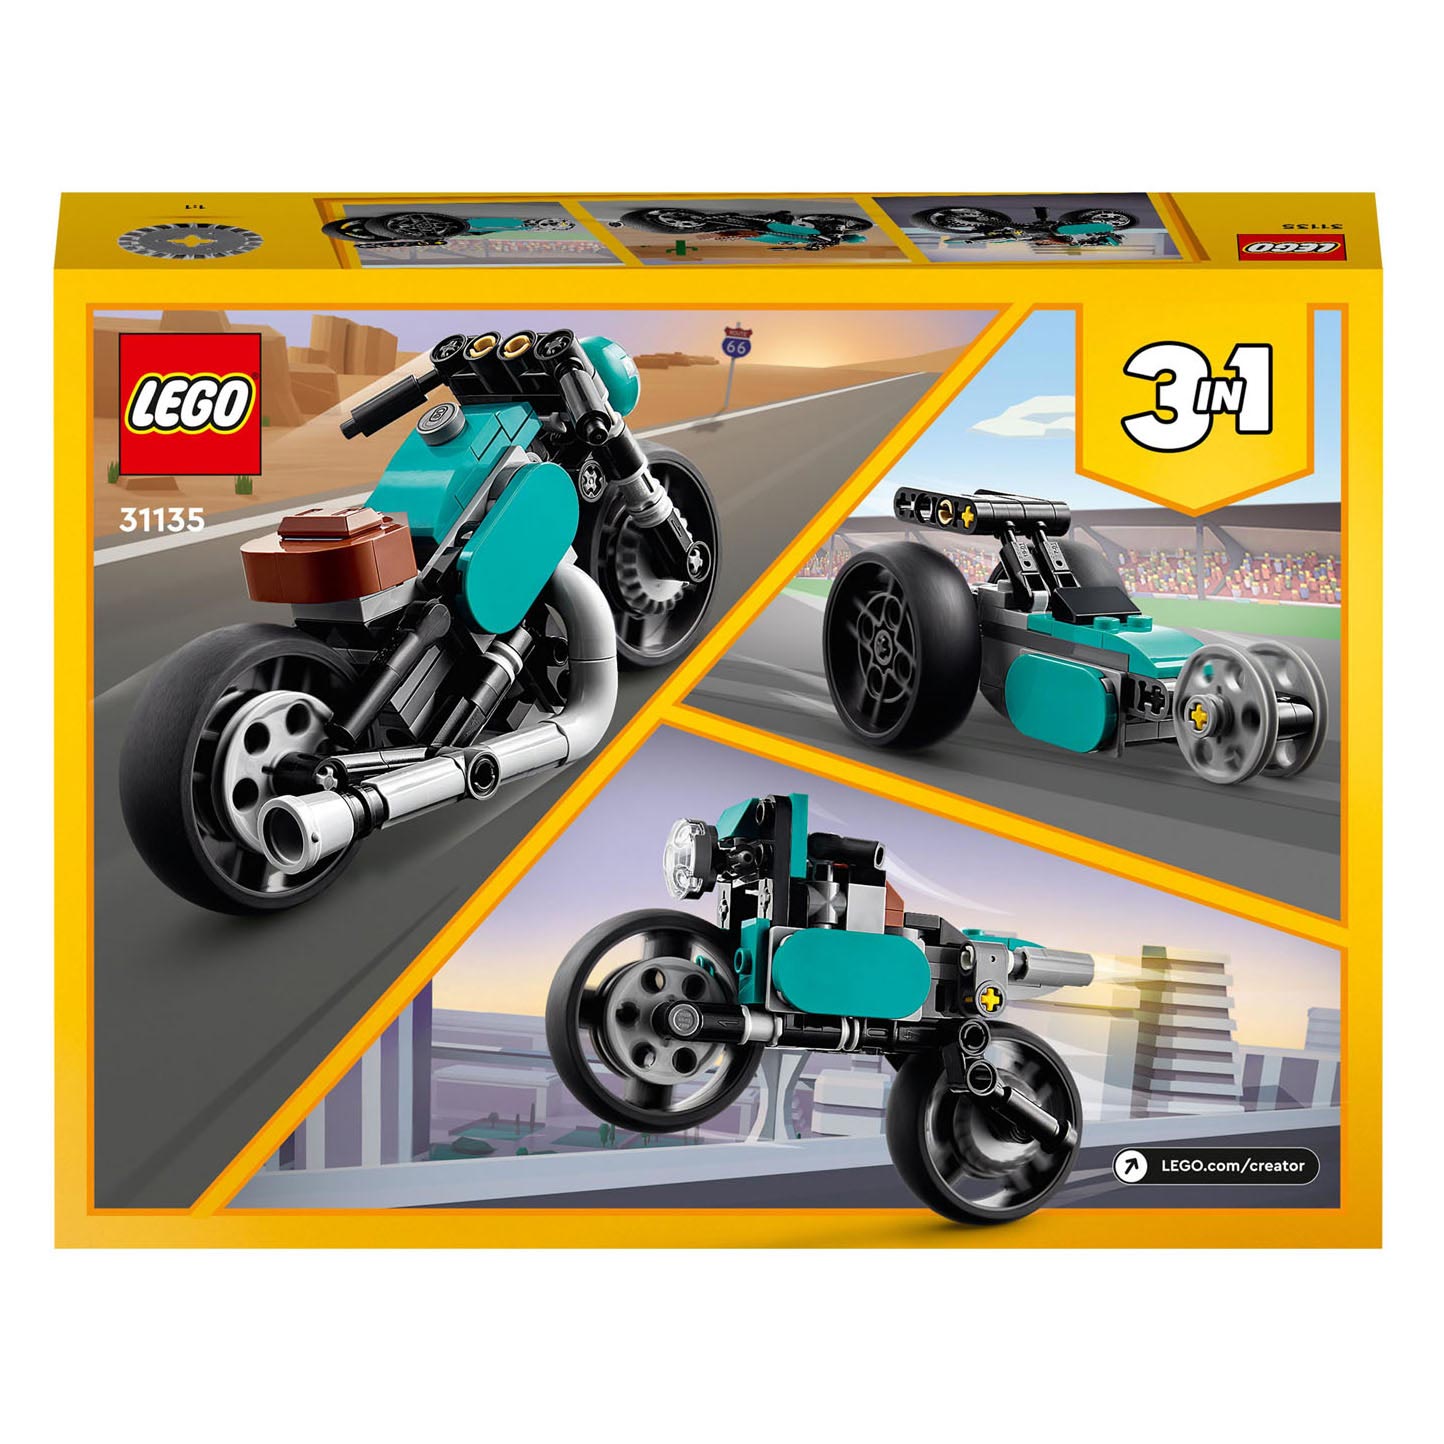 LEGO Creator 31135 La moto classique